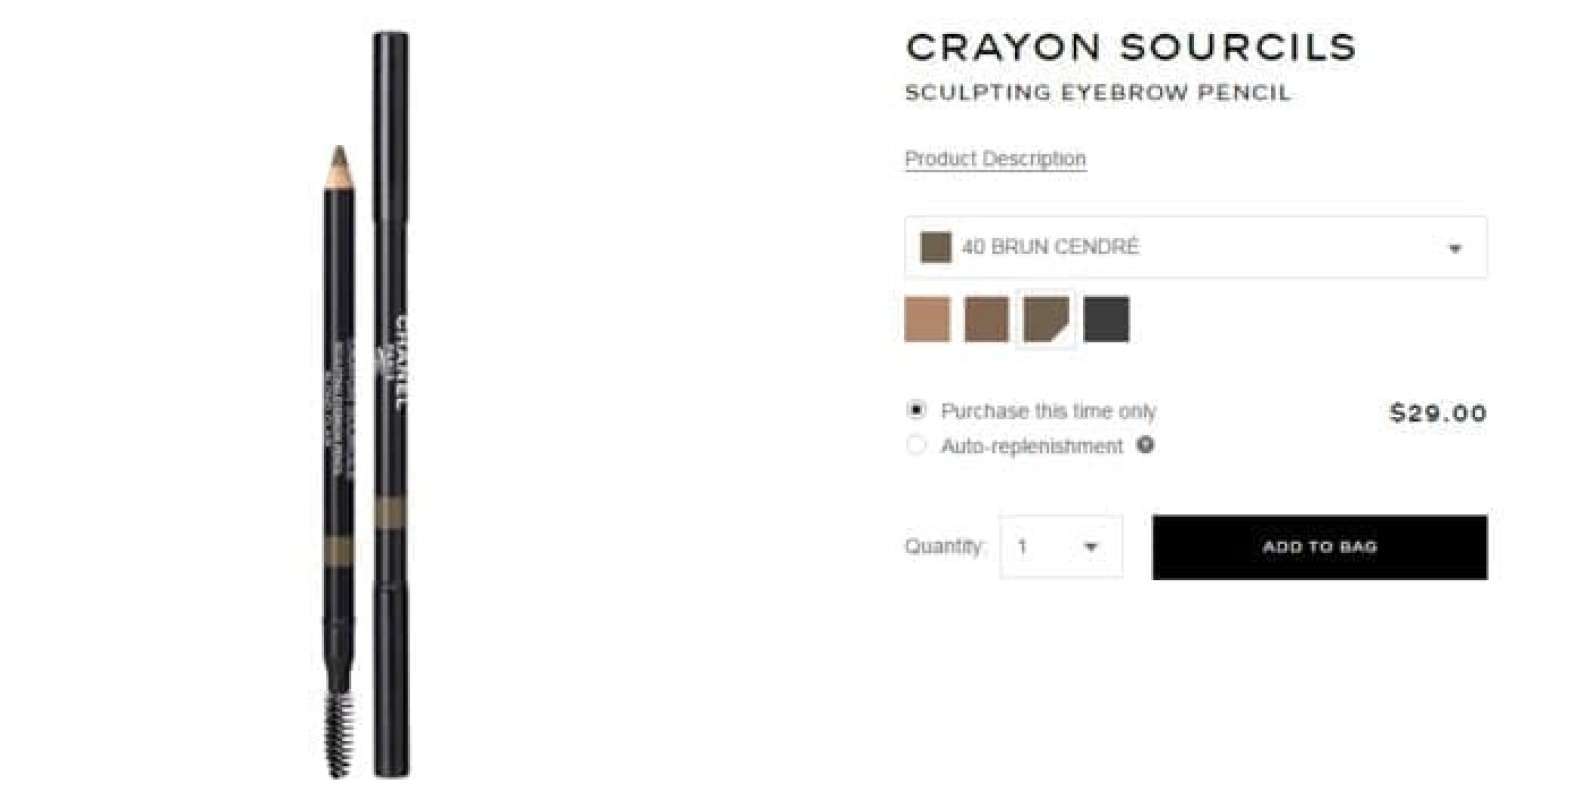 Jual Chanel Crayon Sourcils Sculpting Eyebrow Pencil di Seller